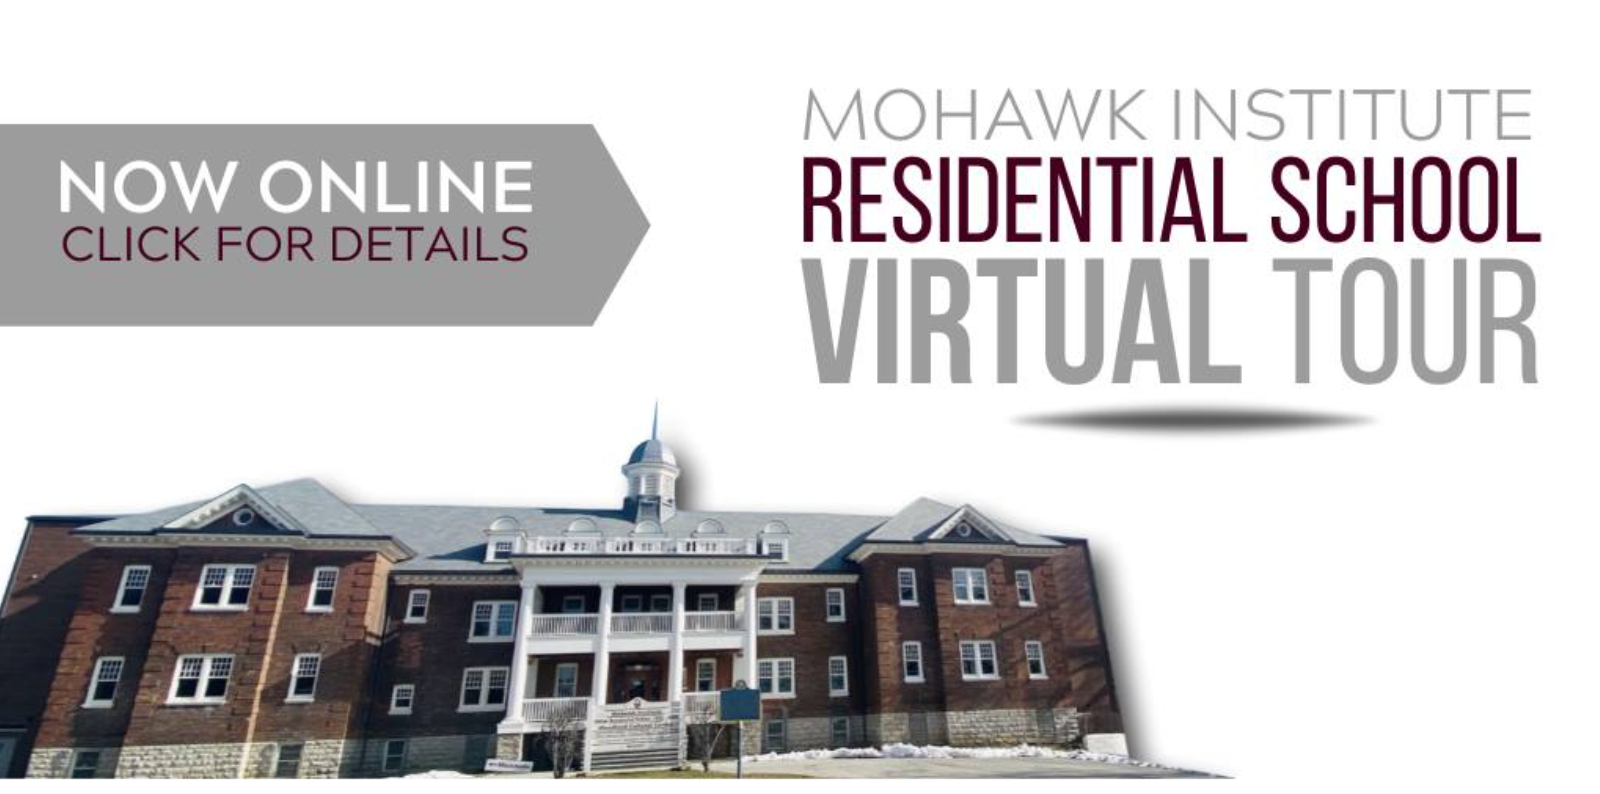 Mohawk Institute Residential School Virtual Tour